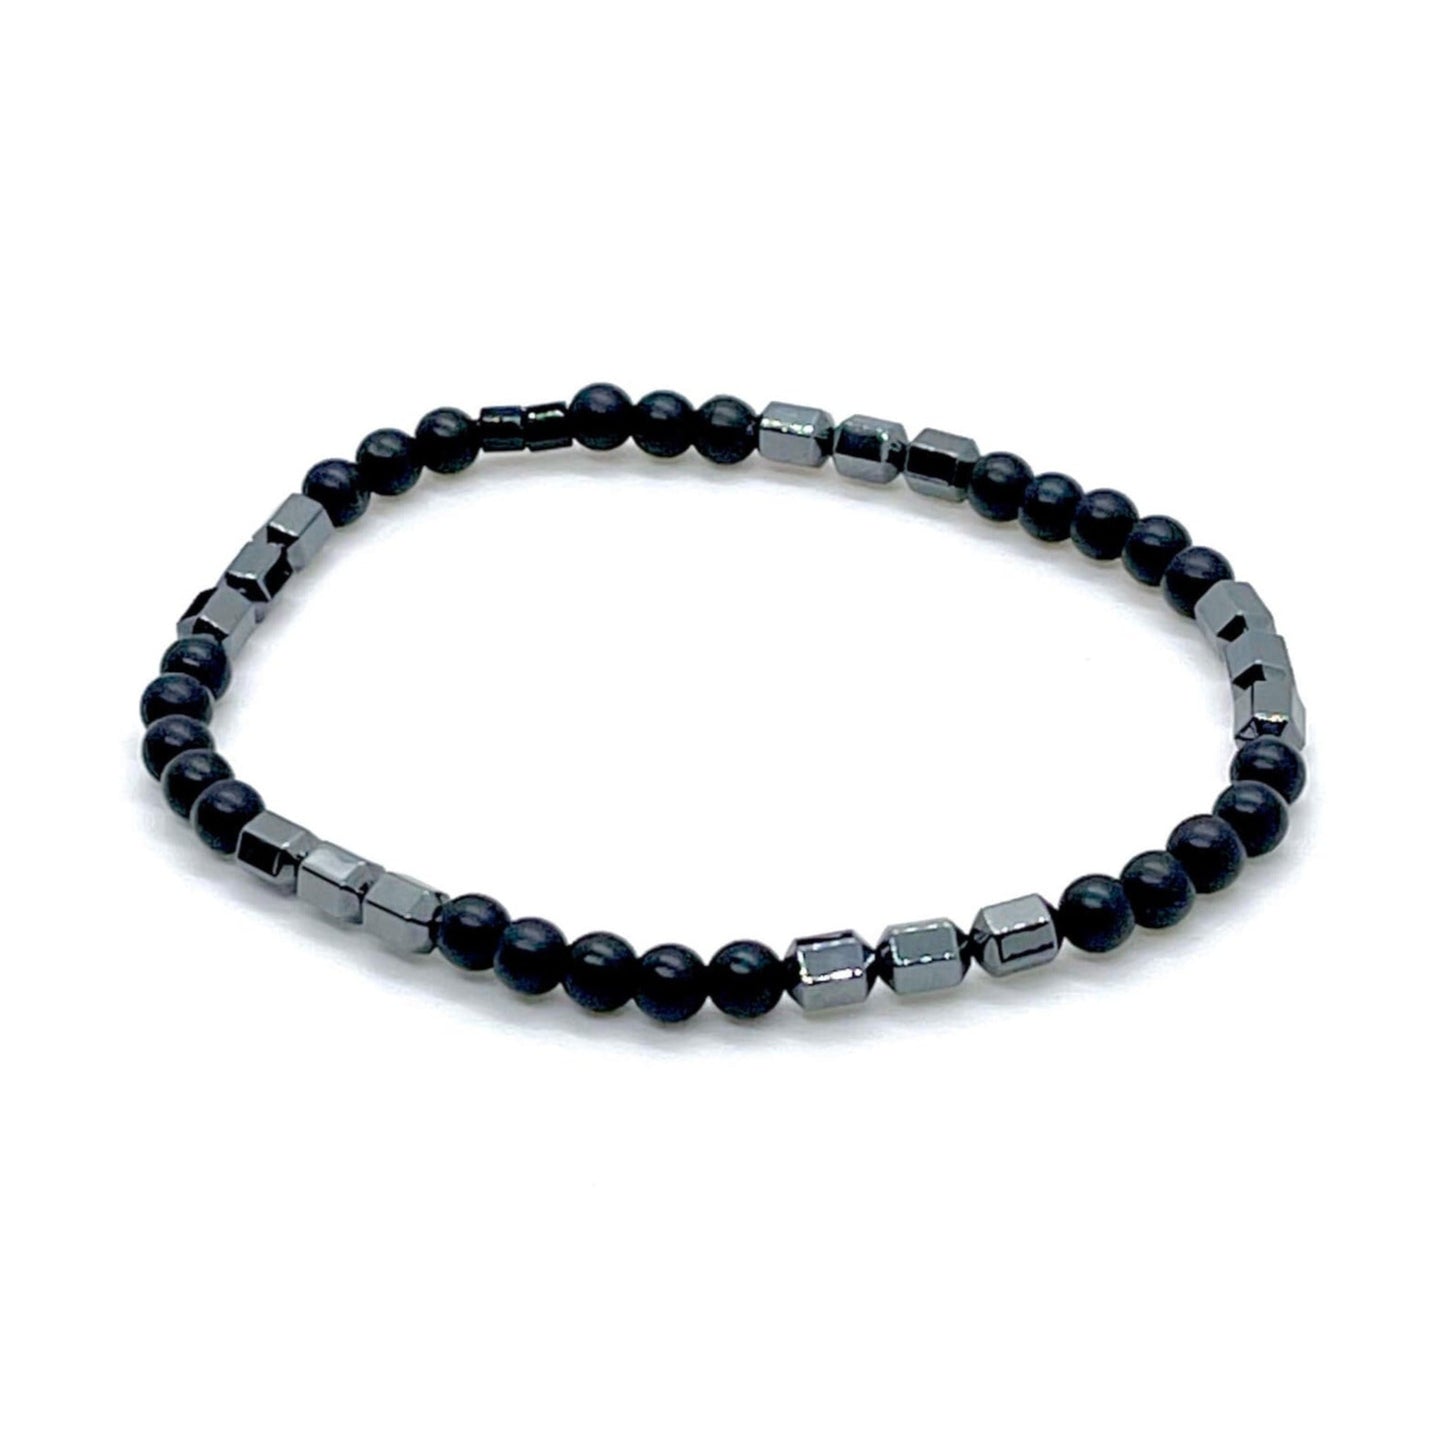 Black onyx and hematite thin bracelet on elastic stretch.